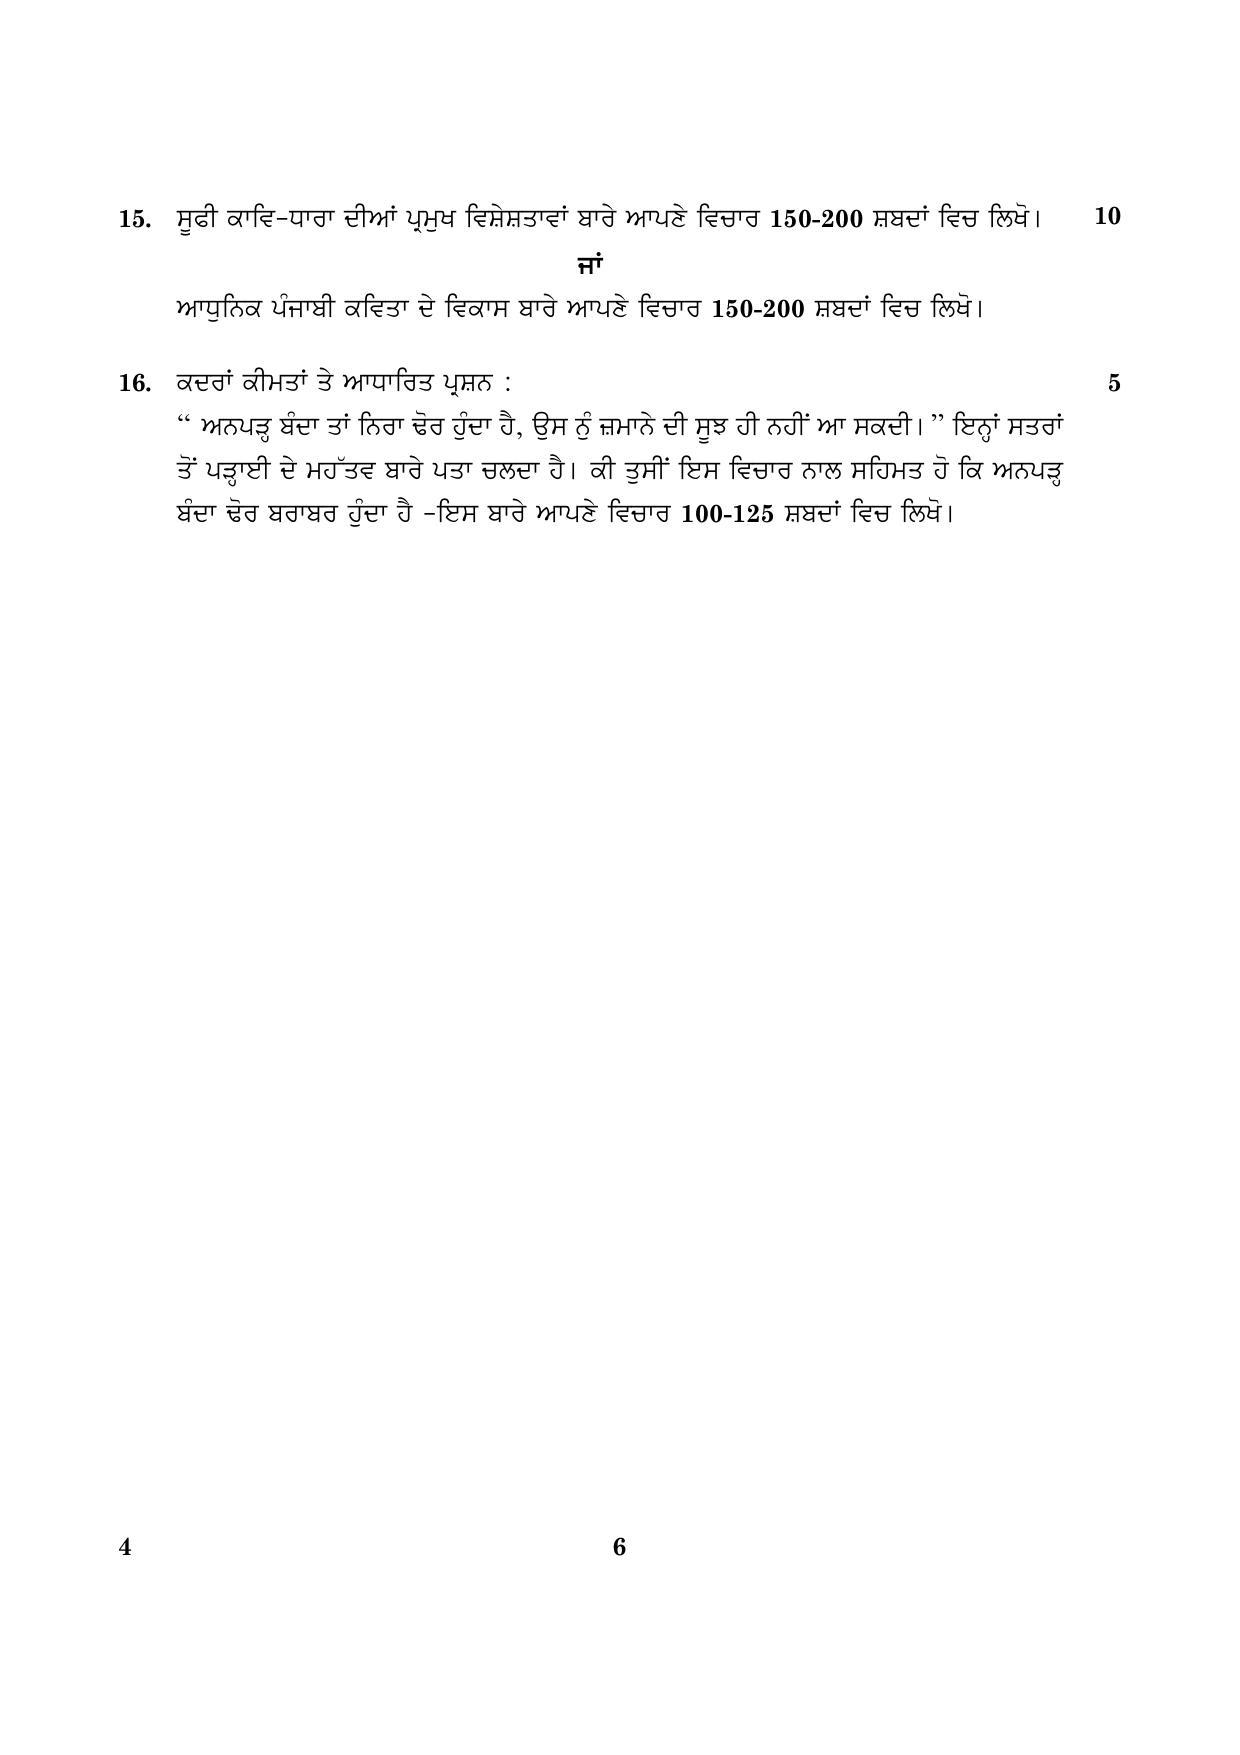 CBSE Class 12 004 Punjabi 2016 Question Paper - Page 6